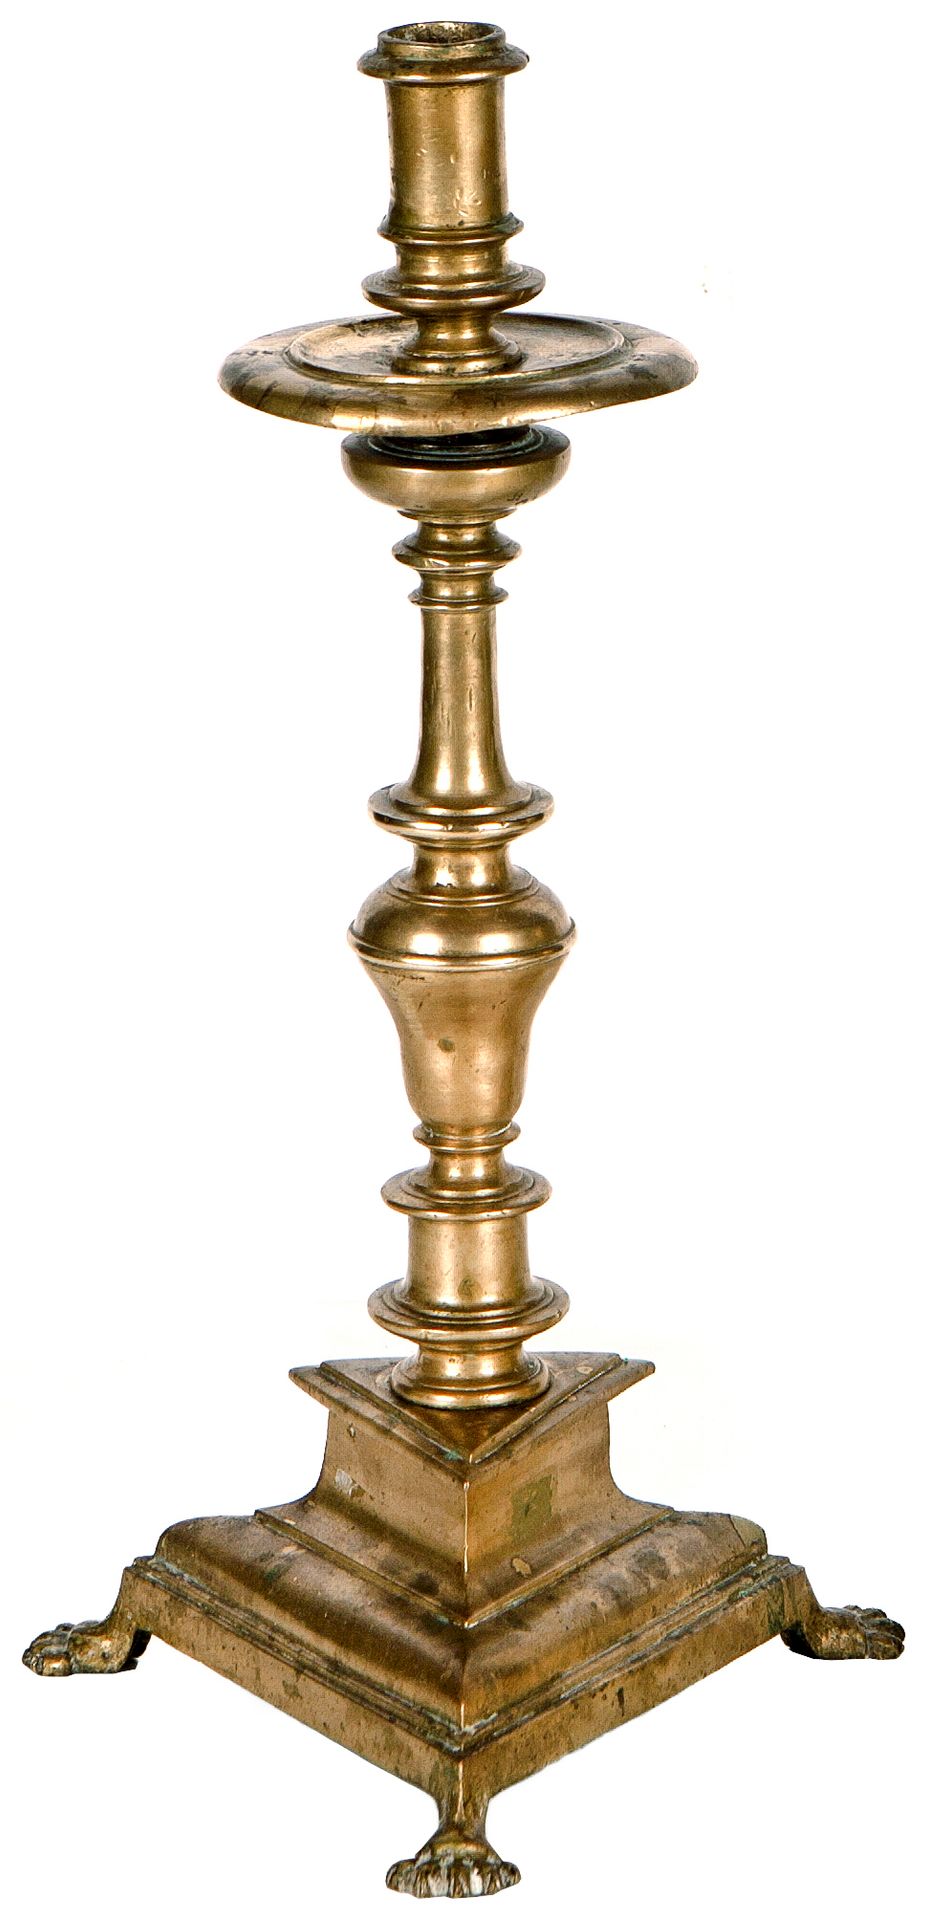 Null 青铜烛台，带栏杆的轴和狮爪装饰的三角形底座，17 世纪。
18 x 14 厘米
400 - 600 €